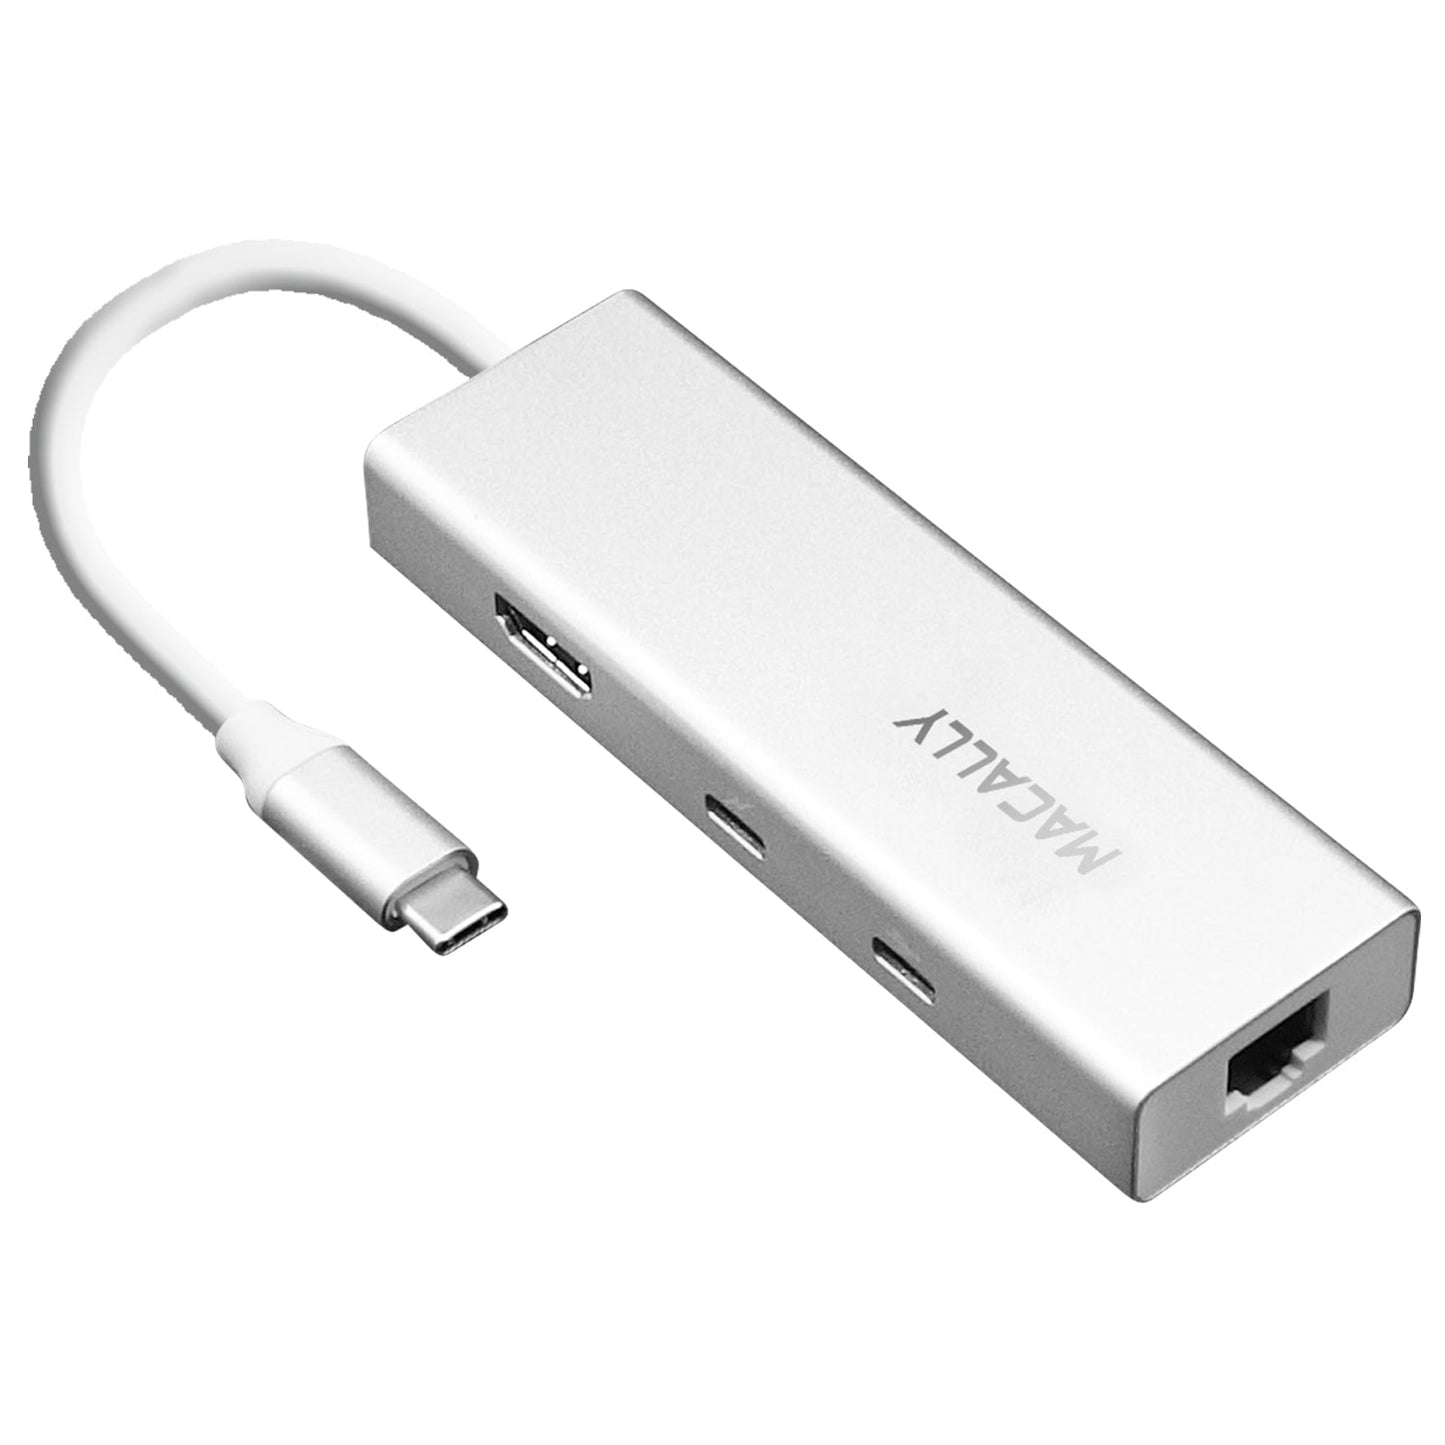 Adaptador Apple USB-C con 3 puertos: HDMI/USB/USB-C